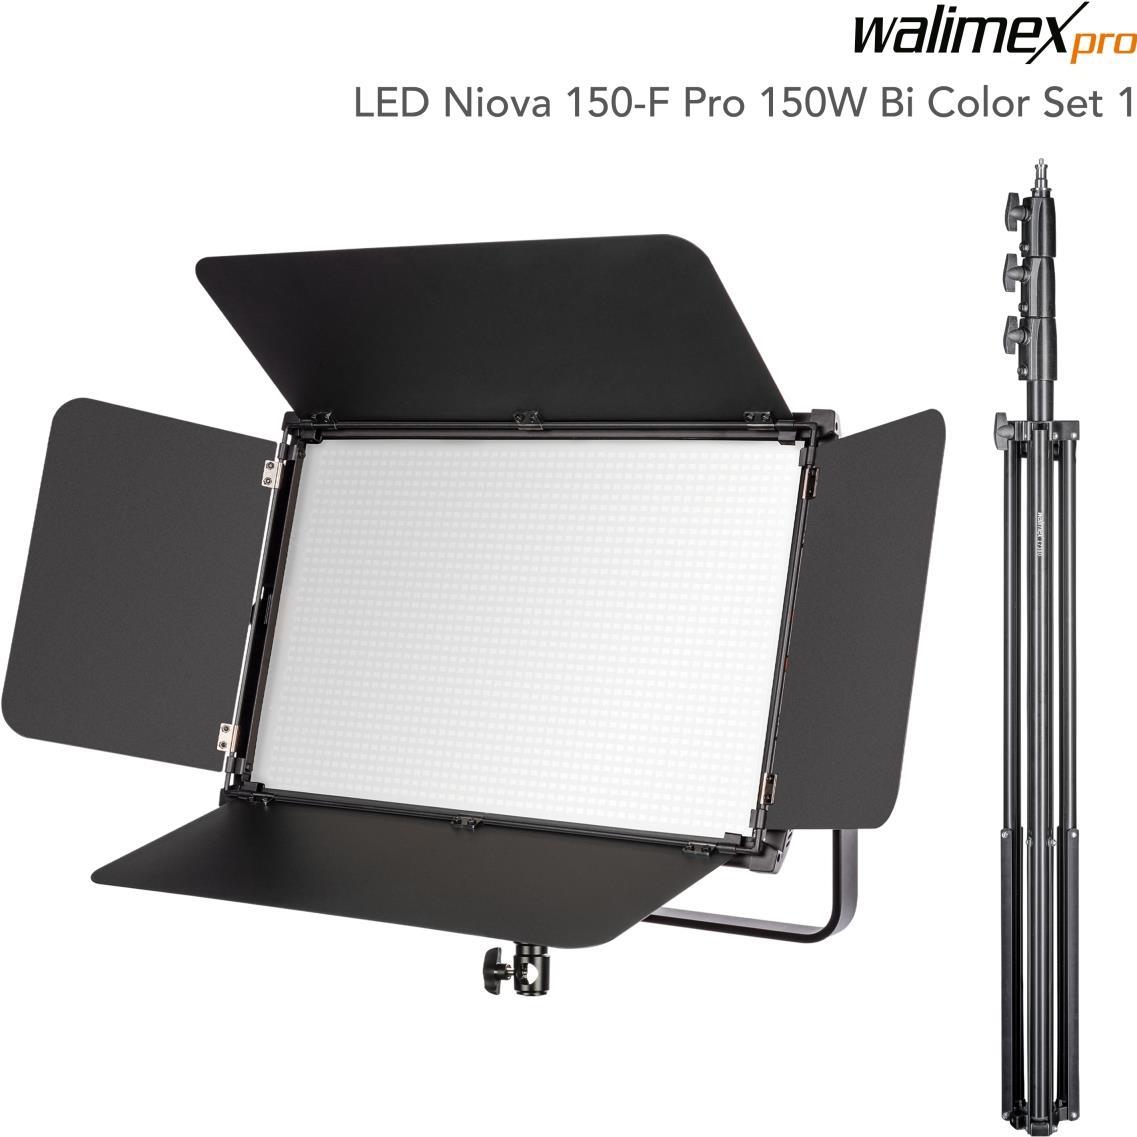 WALSER Walimex pro LED Niova 150-F Pro 150W Bi Color Set1 (23220)